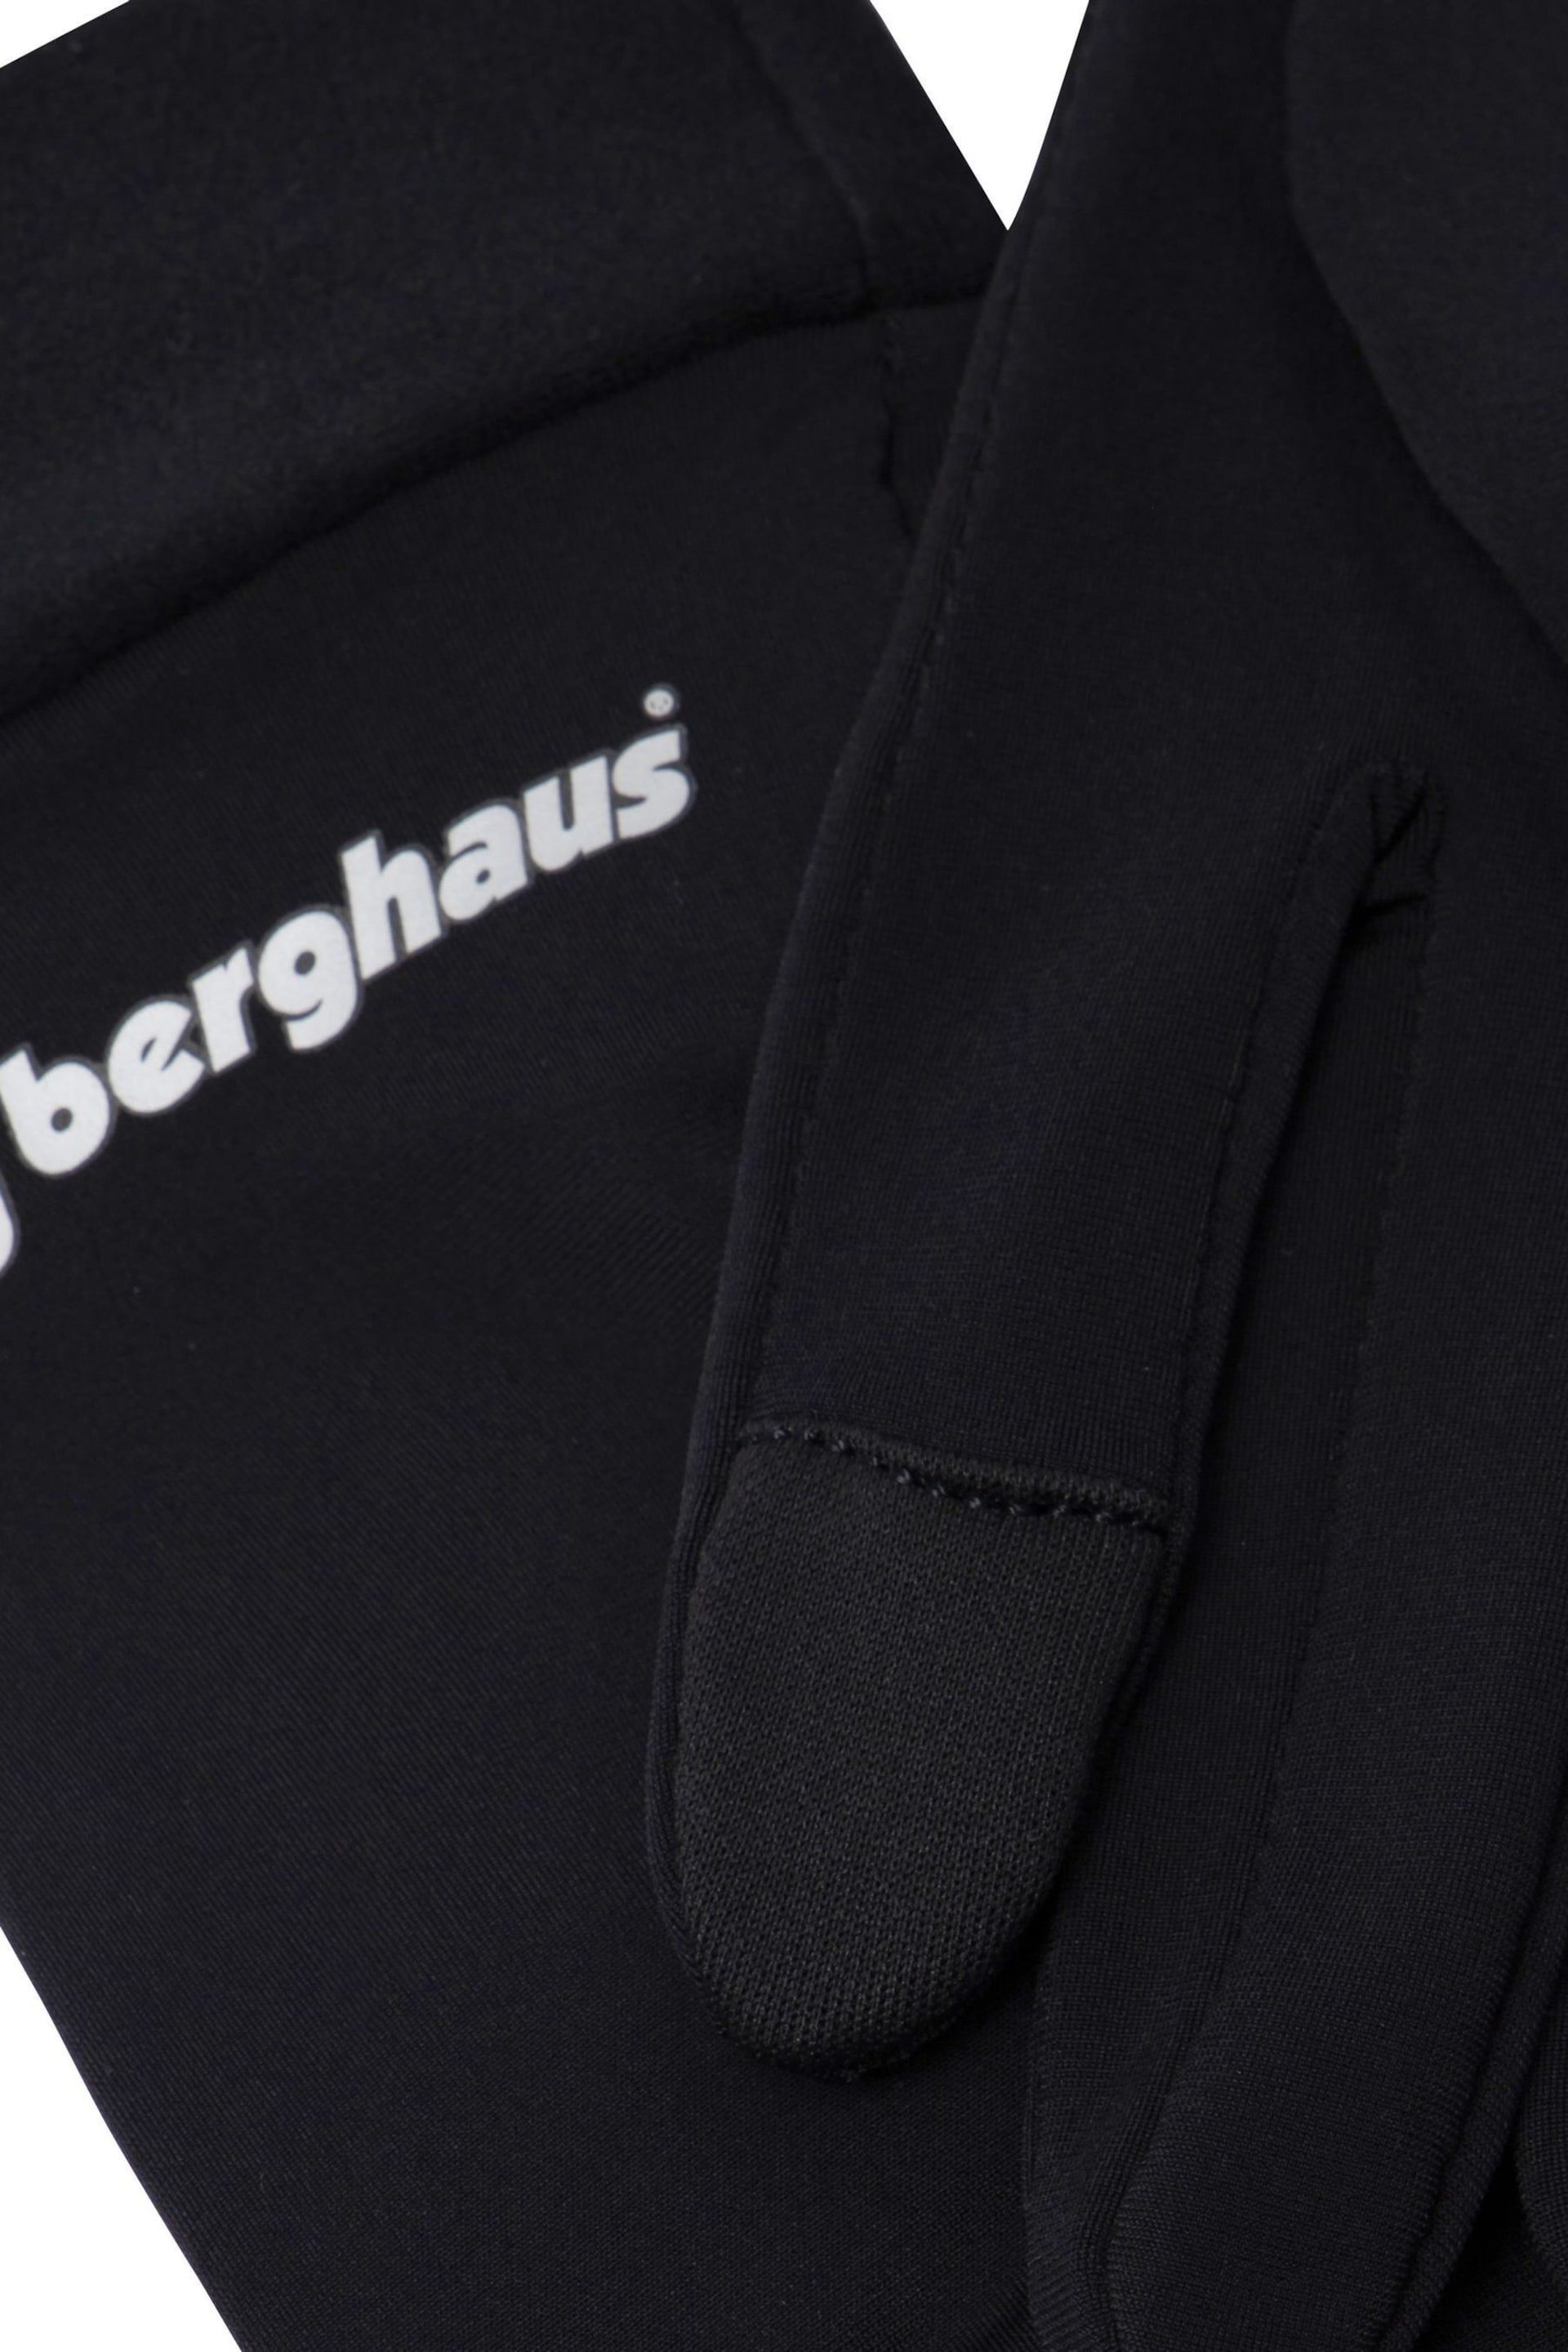 Berghaus Black Gloves - Image 4 of 4